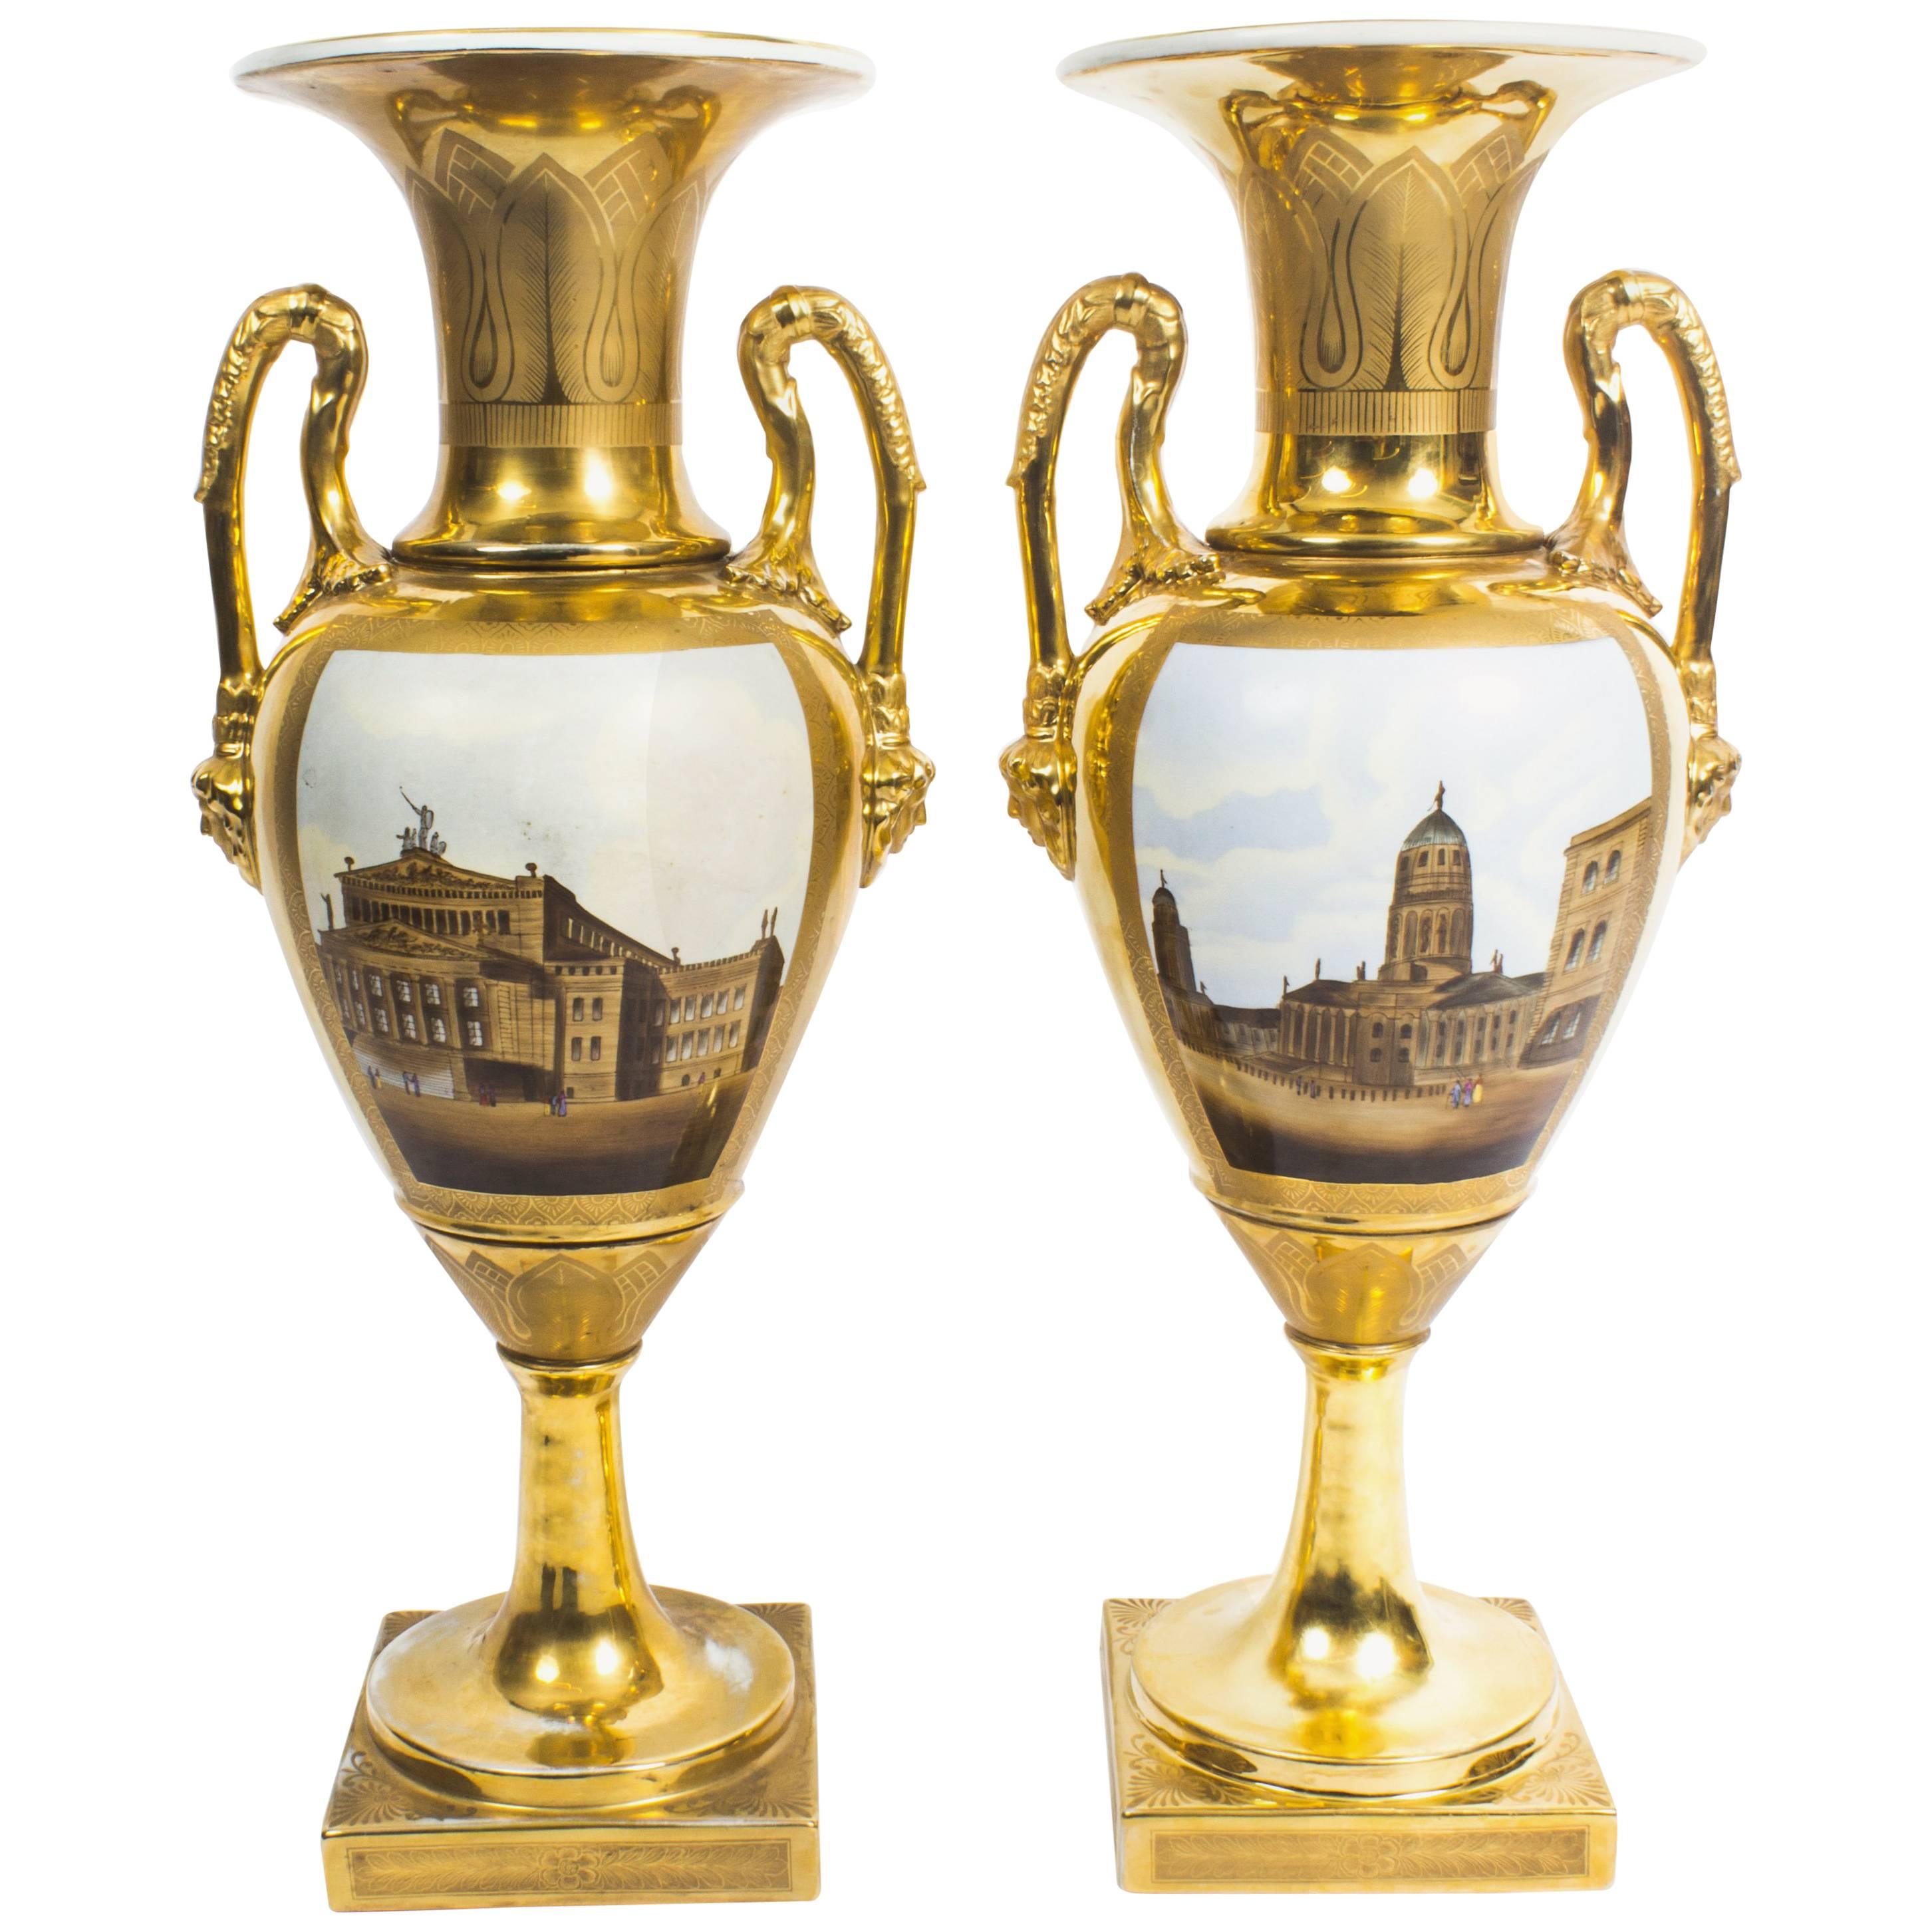 Antique Pair of Continental Porcelain Double Handled Gilt Vases